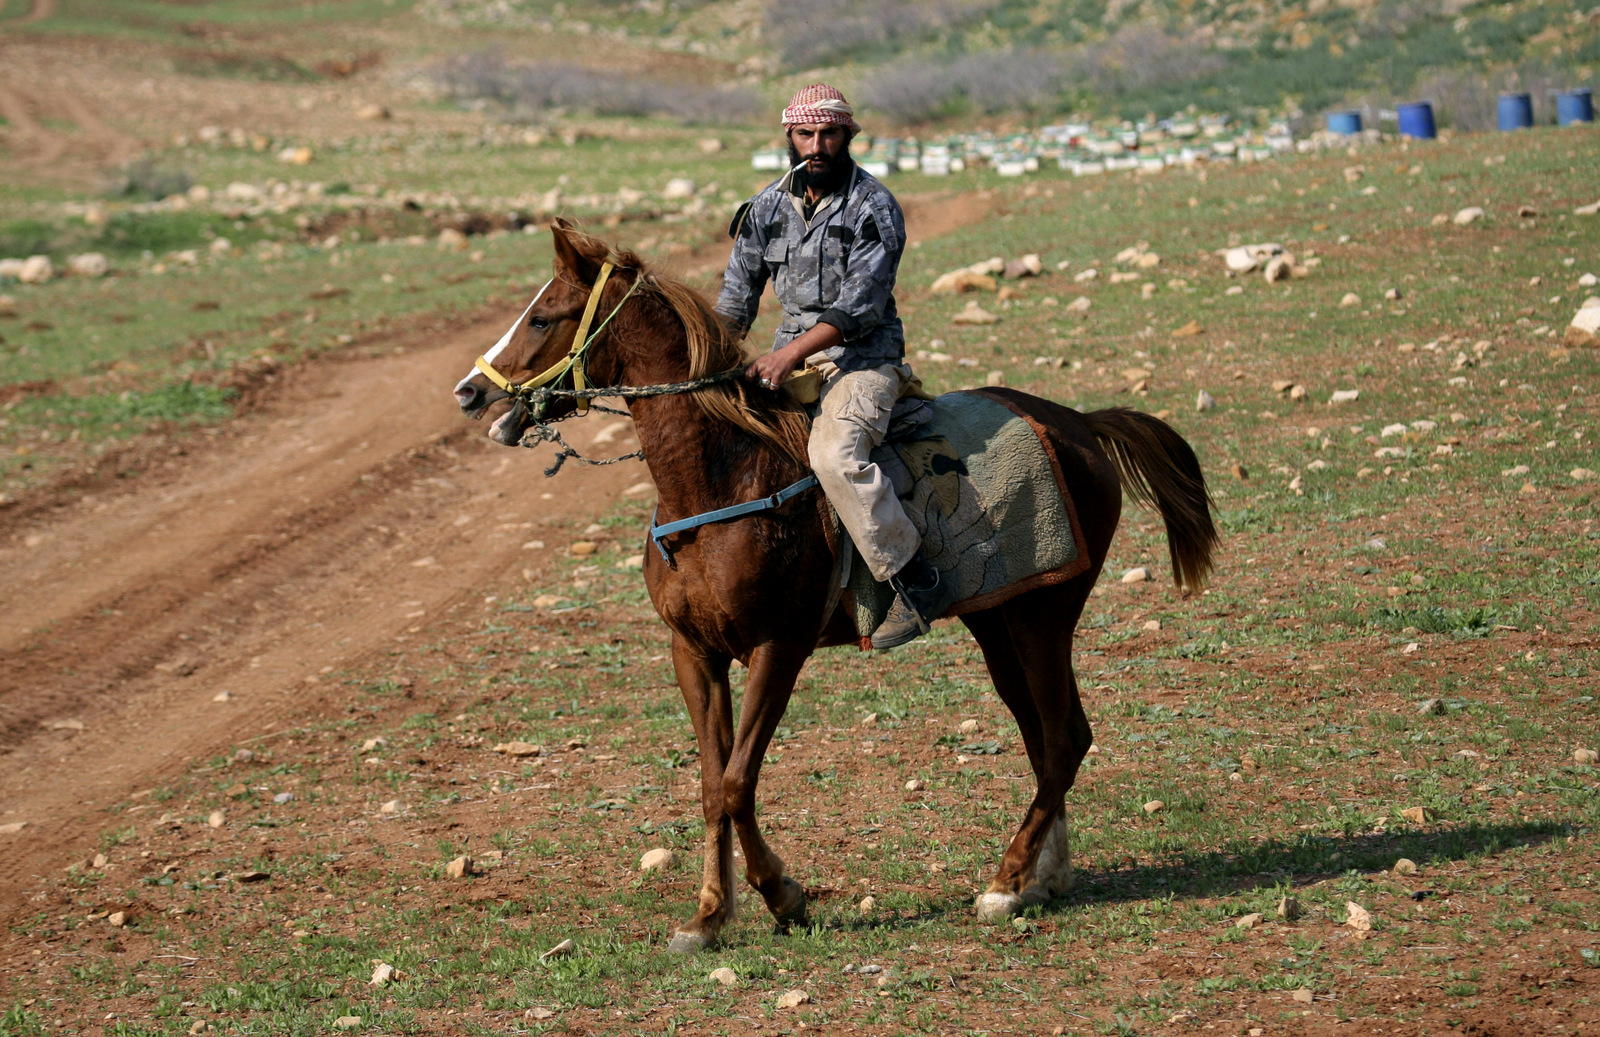 A Palestinian Bedouin rides a horse near the town of Tubas in the Jordan Valley, Jan. 3, 2013. (AP/Mohammed Ballas)